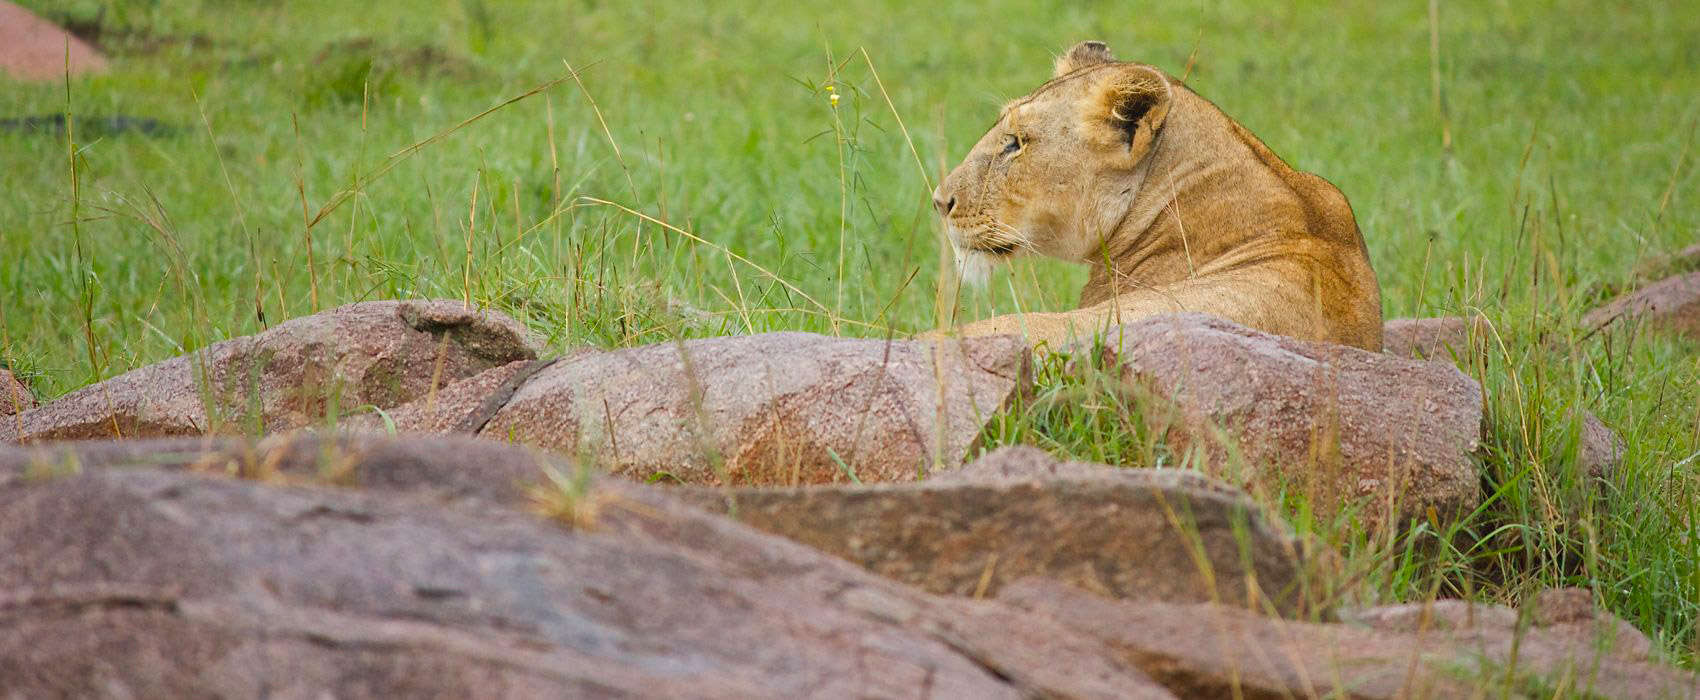 African Serengeti National Park Safari lion